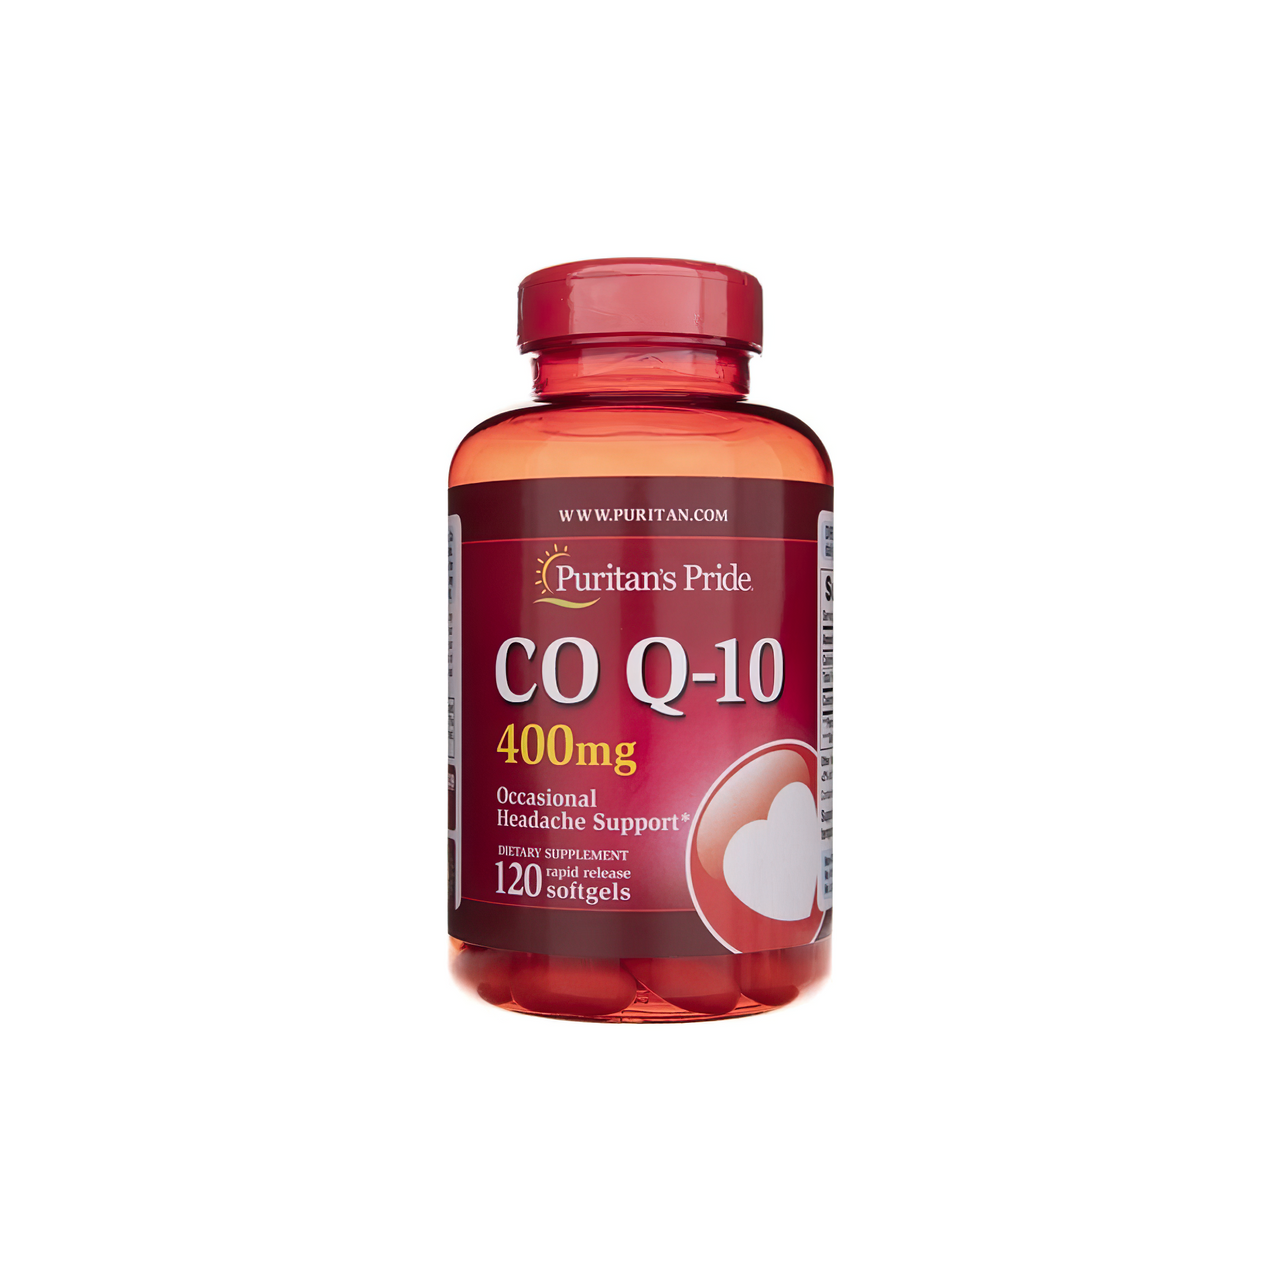 Puritan's Pride Coenzyme Q10 Rapid Release 400mg capsules.